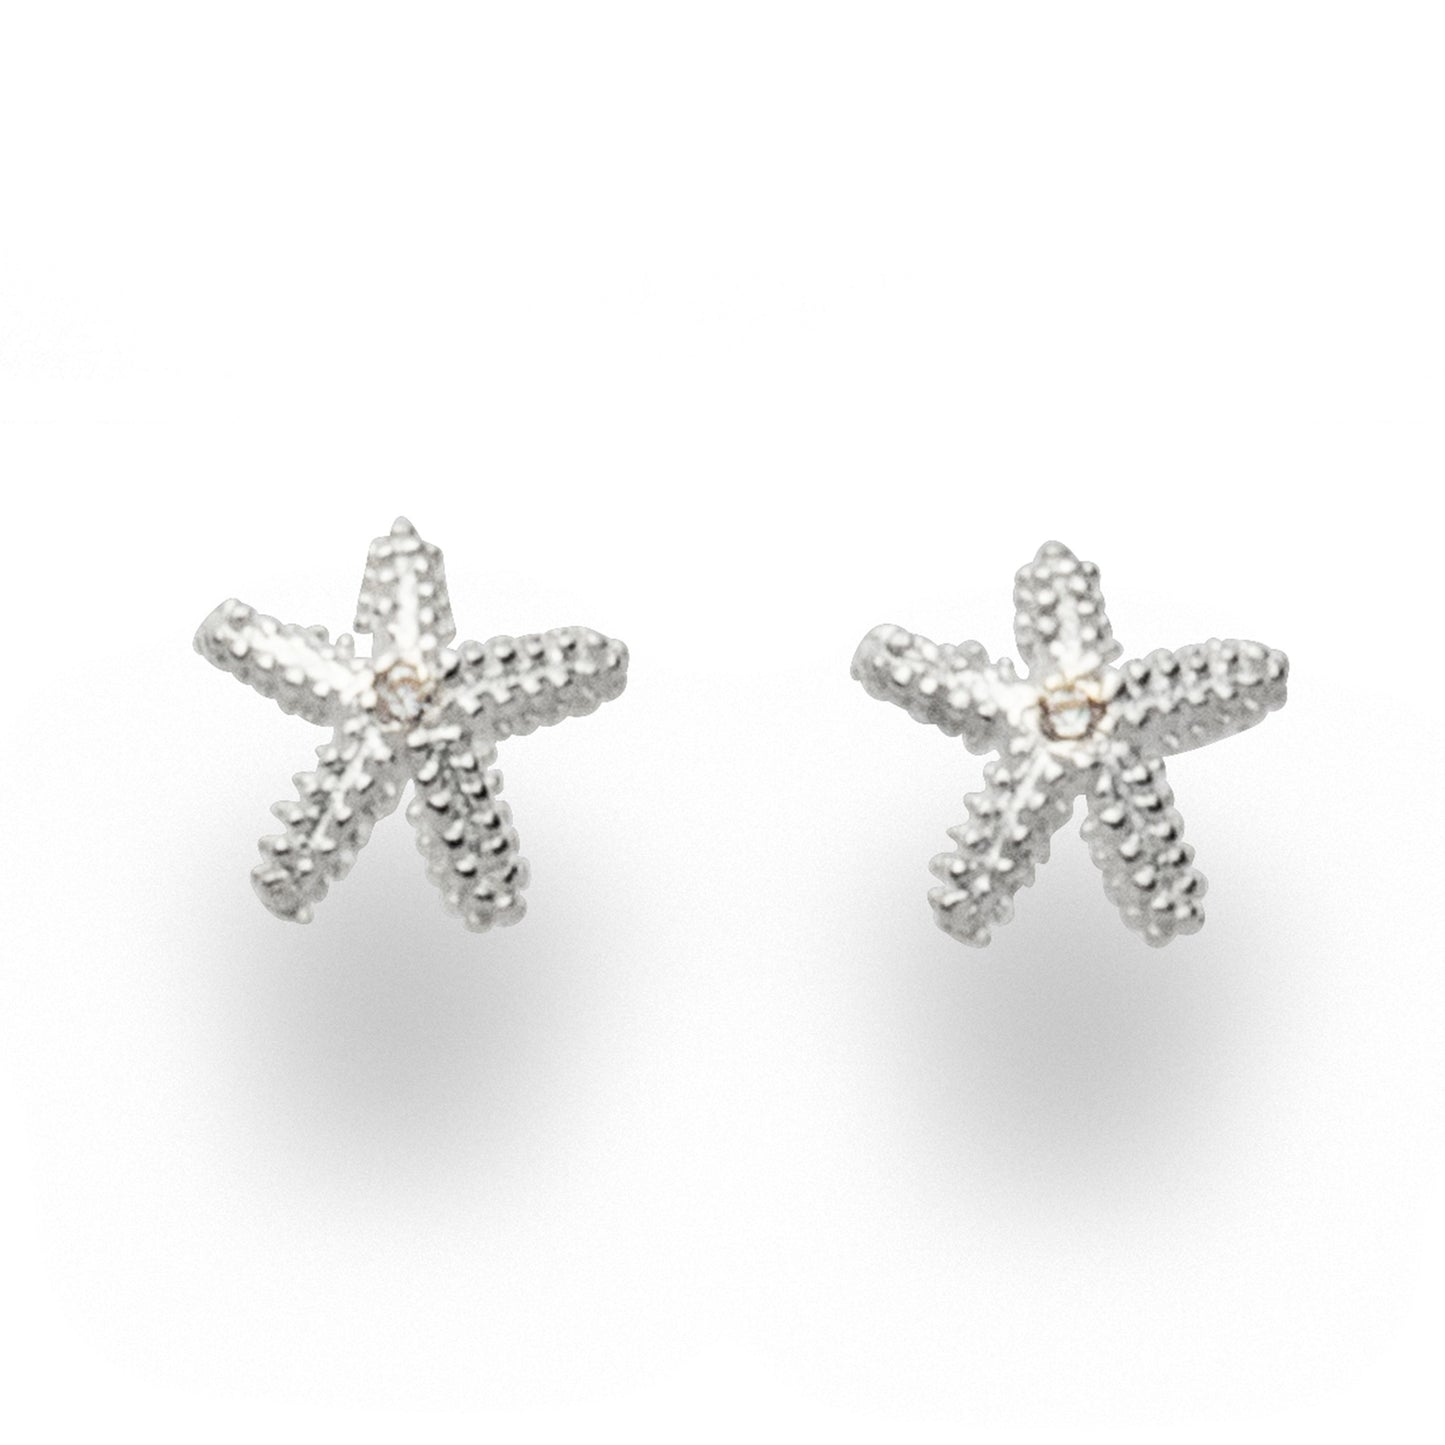 Stud earrings "Starfish" 